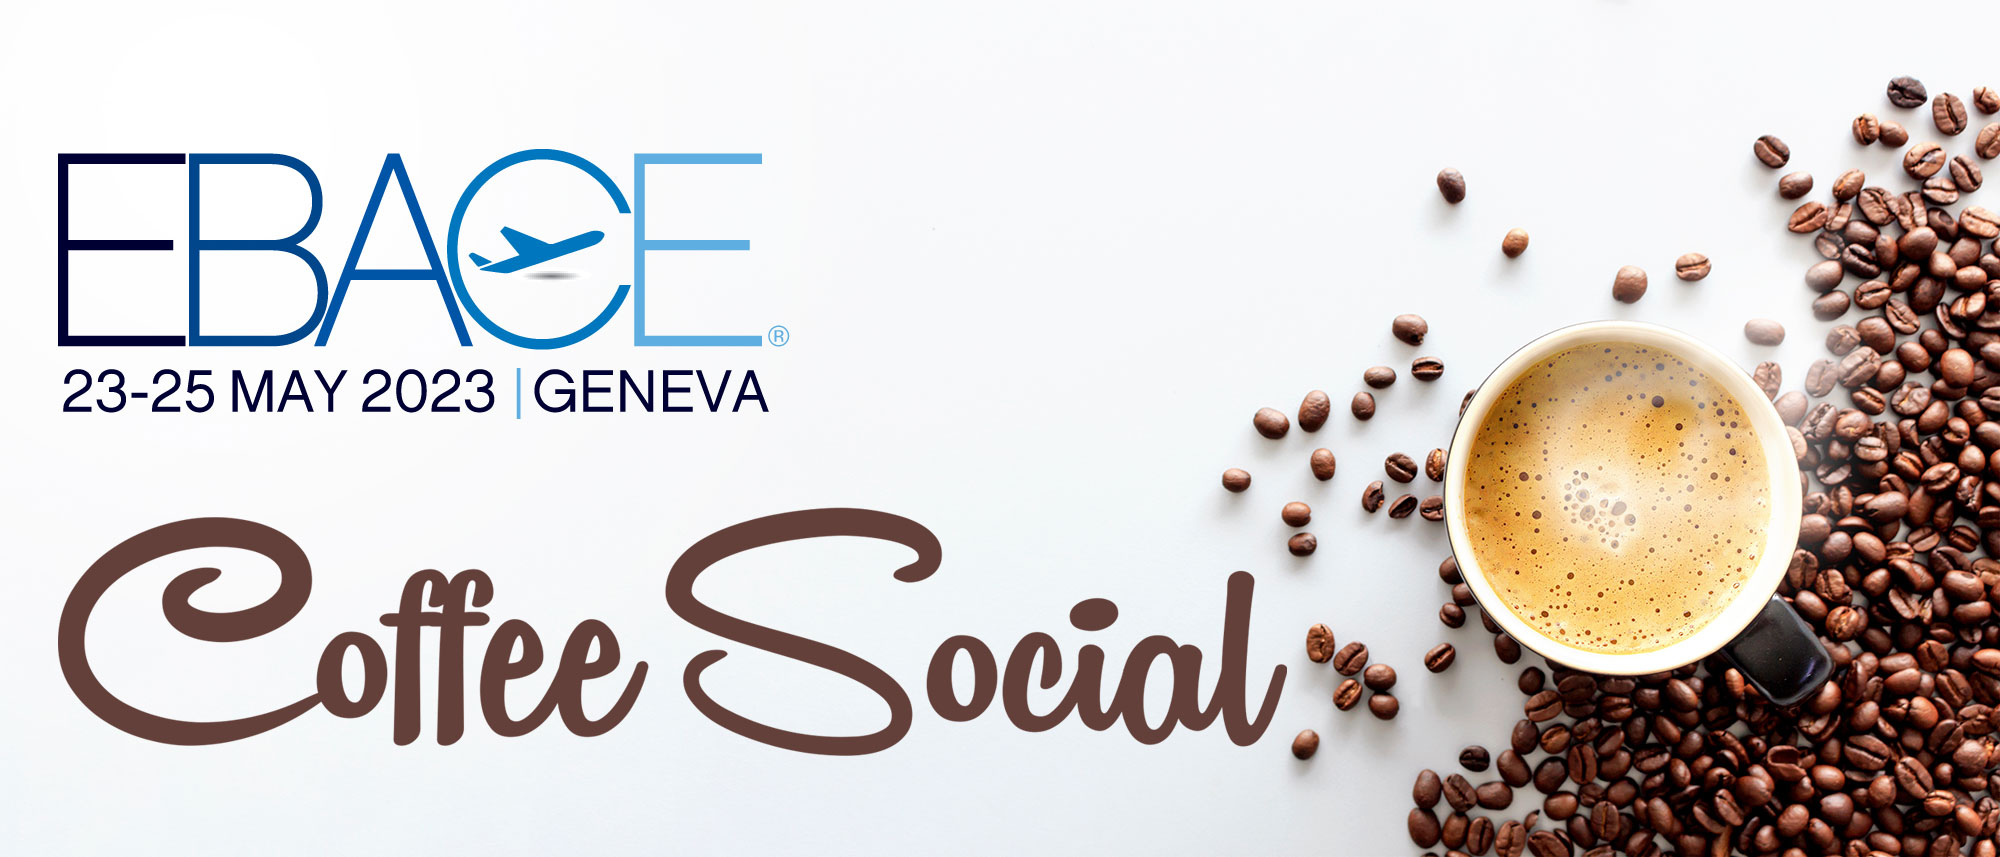 EBACE2023 Coffee Social